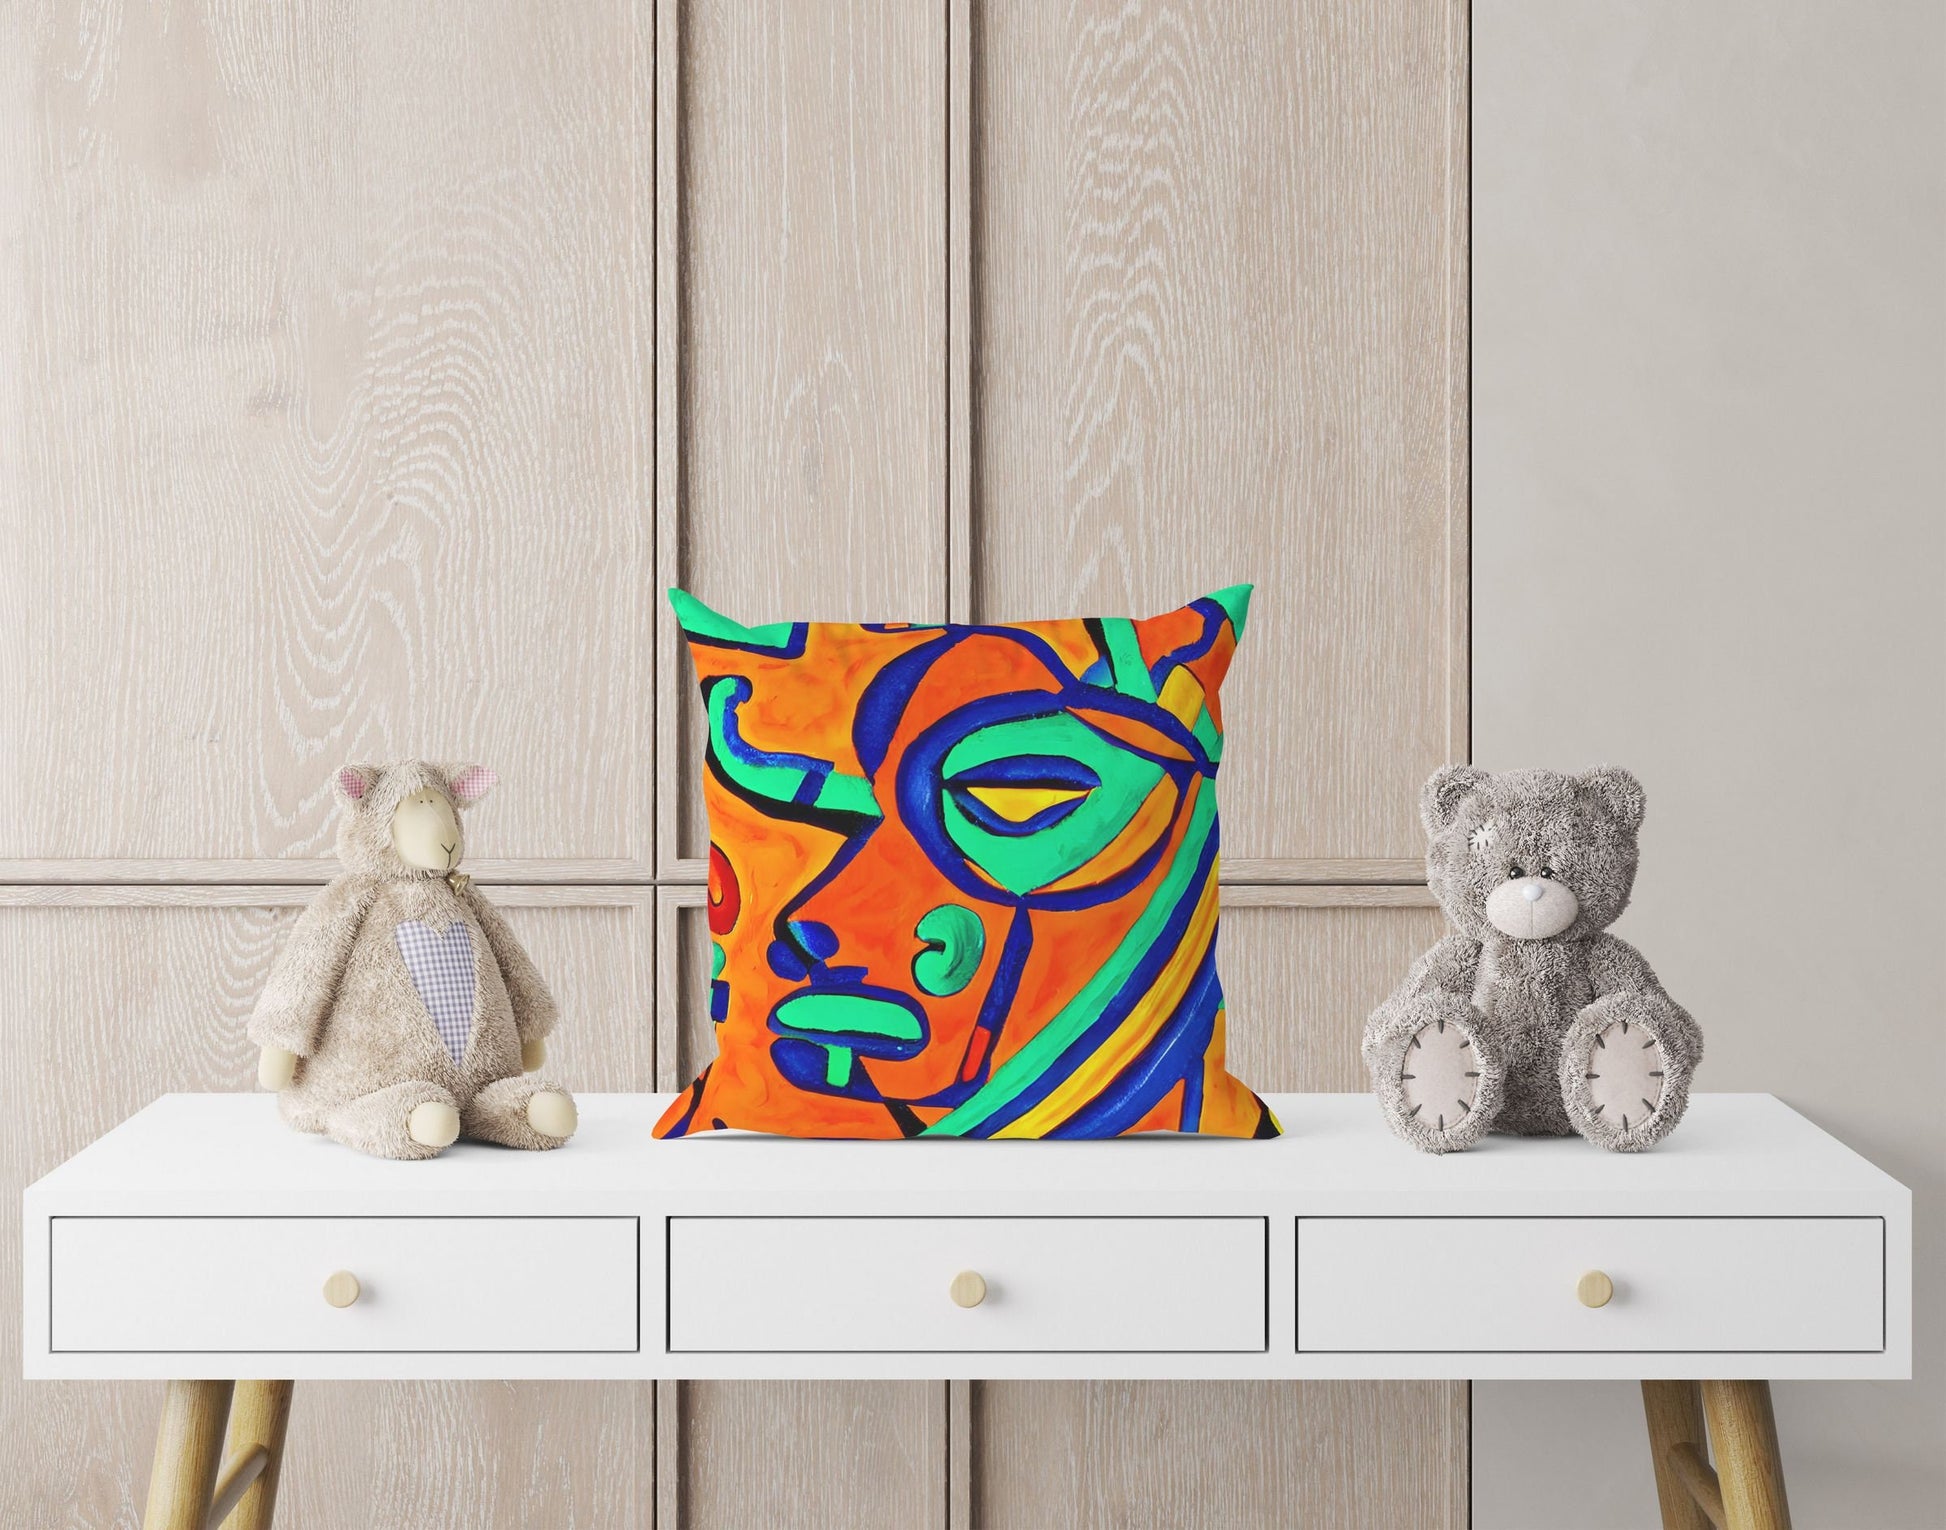 Mayan Culture, Tapestry Pillows, Cat Pillow, Artist Pillow, Colorful Pillow Case, Contemporary Pillow, 24X24 Pillow Case, Housewarming Gift